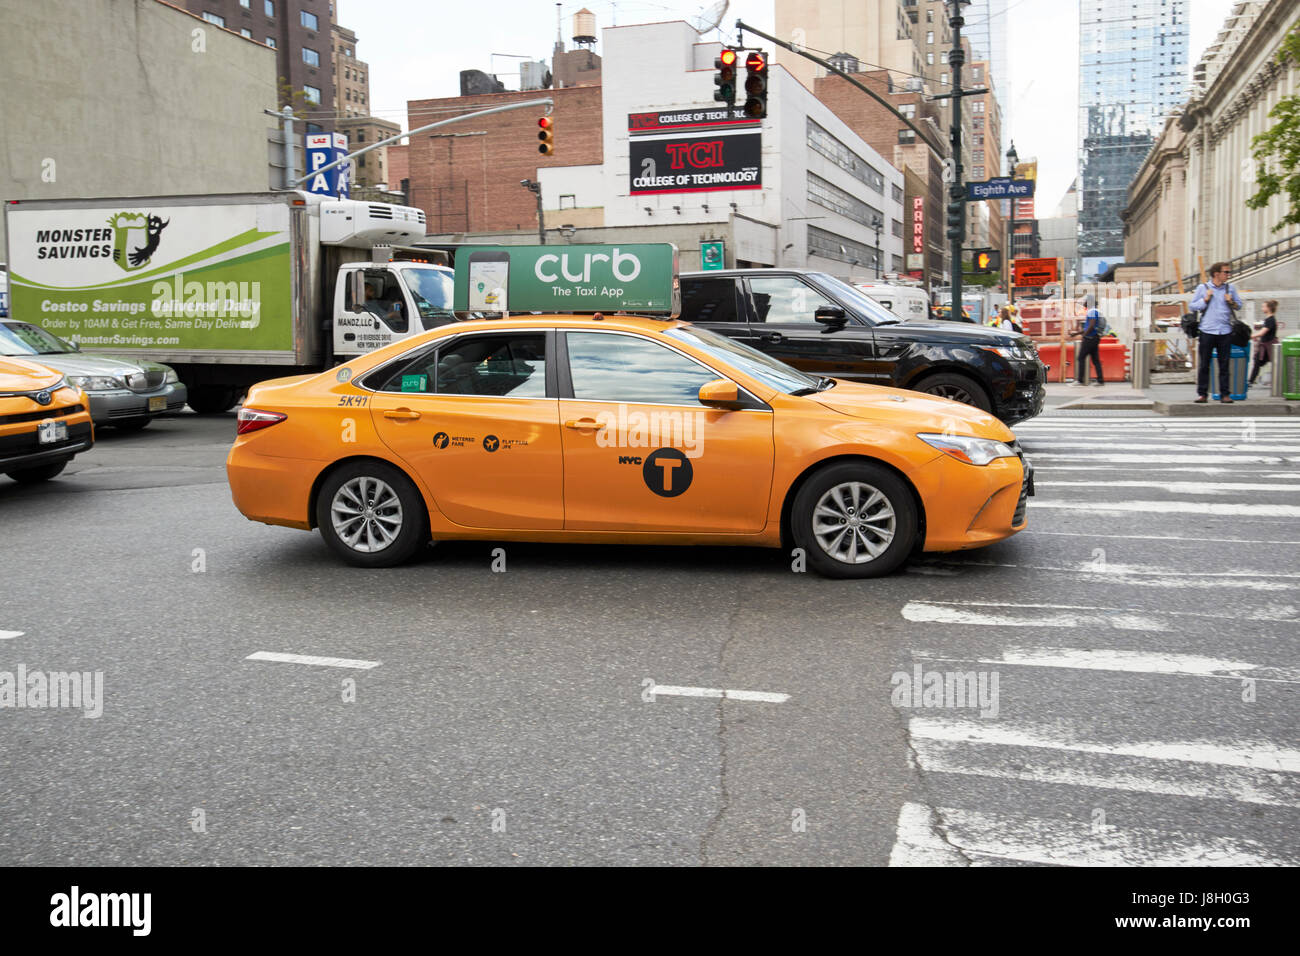 toyota camry New York City yellow cab USA Stock Photo